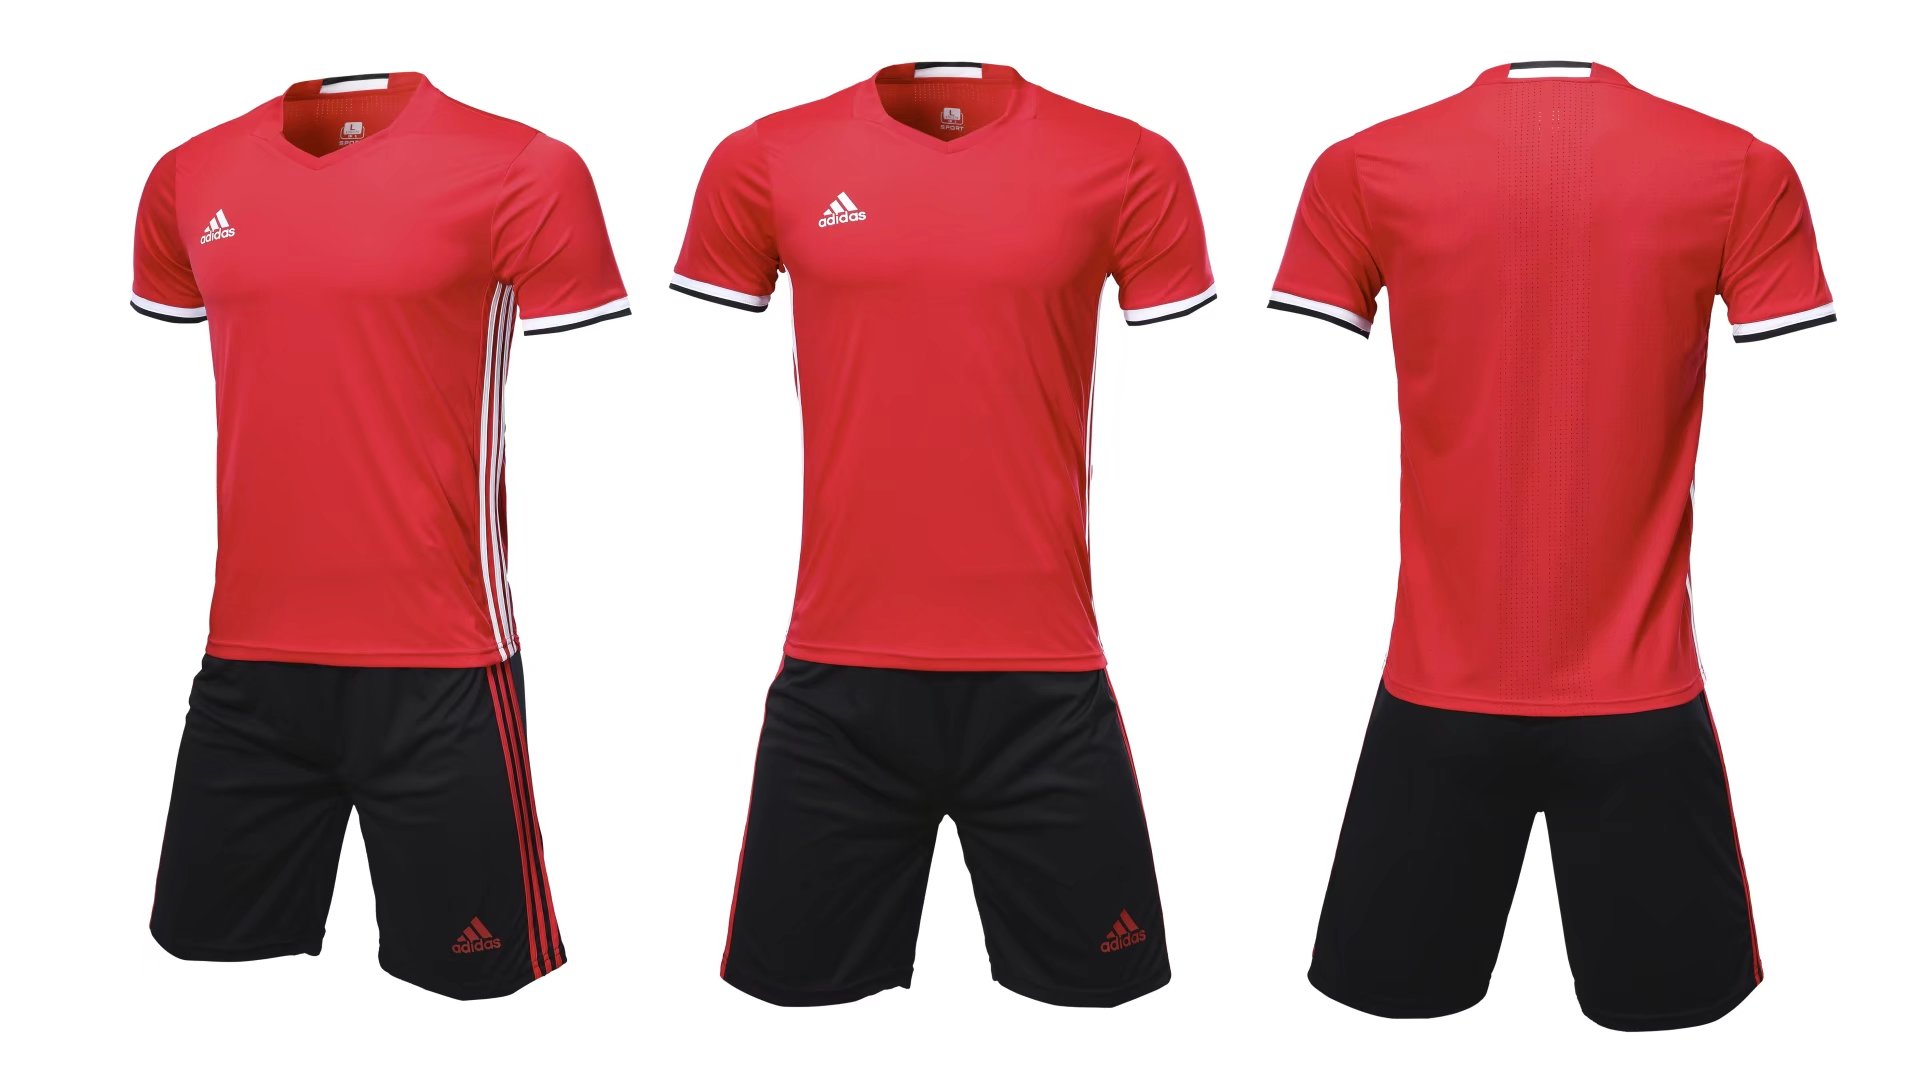 Adidas Soccer Team Uniforms 038